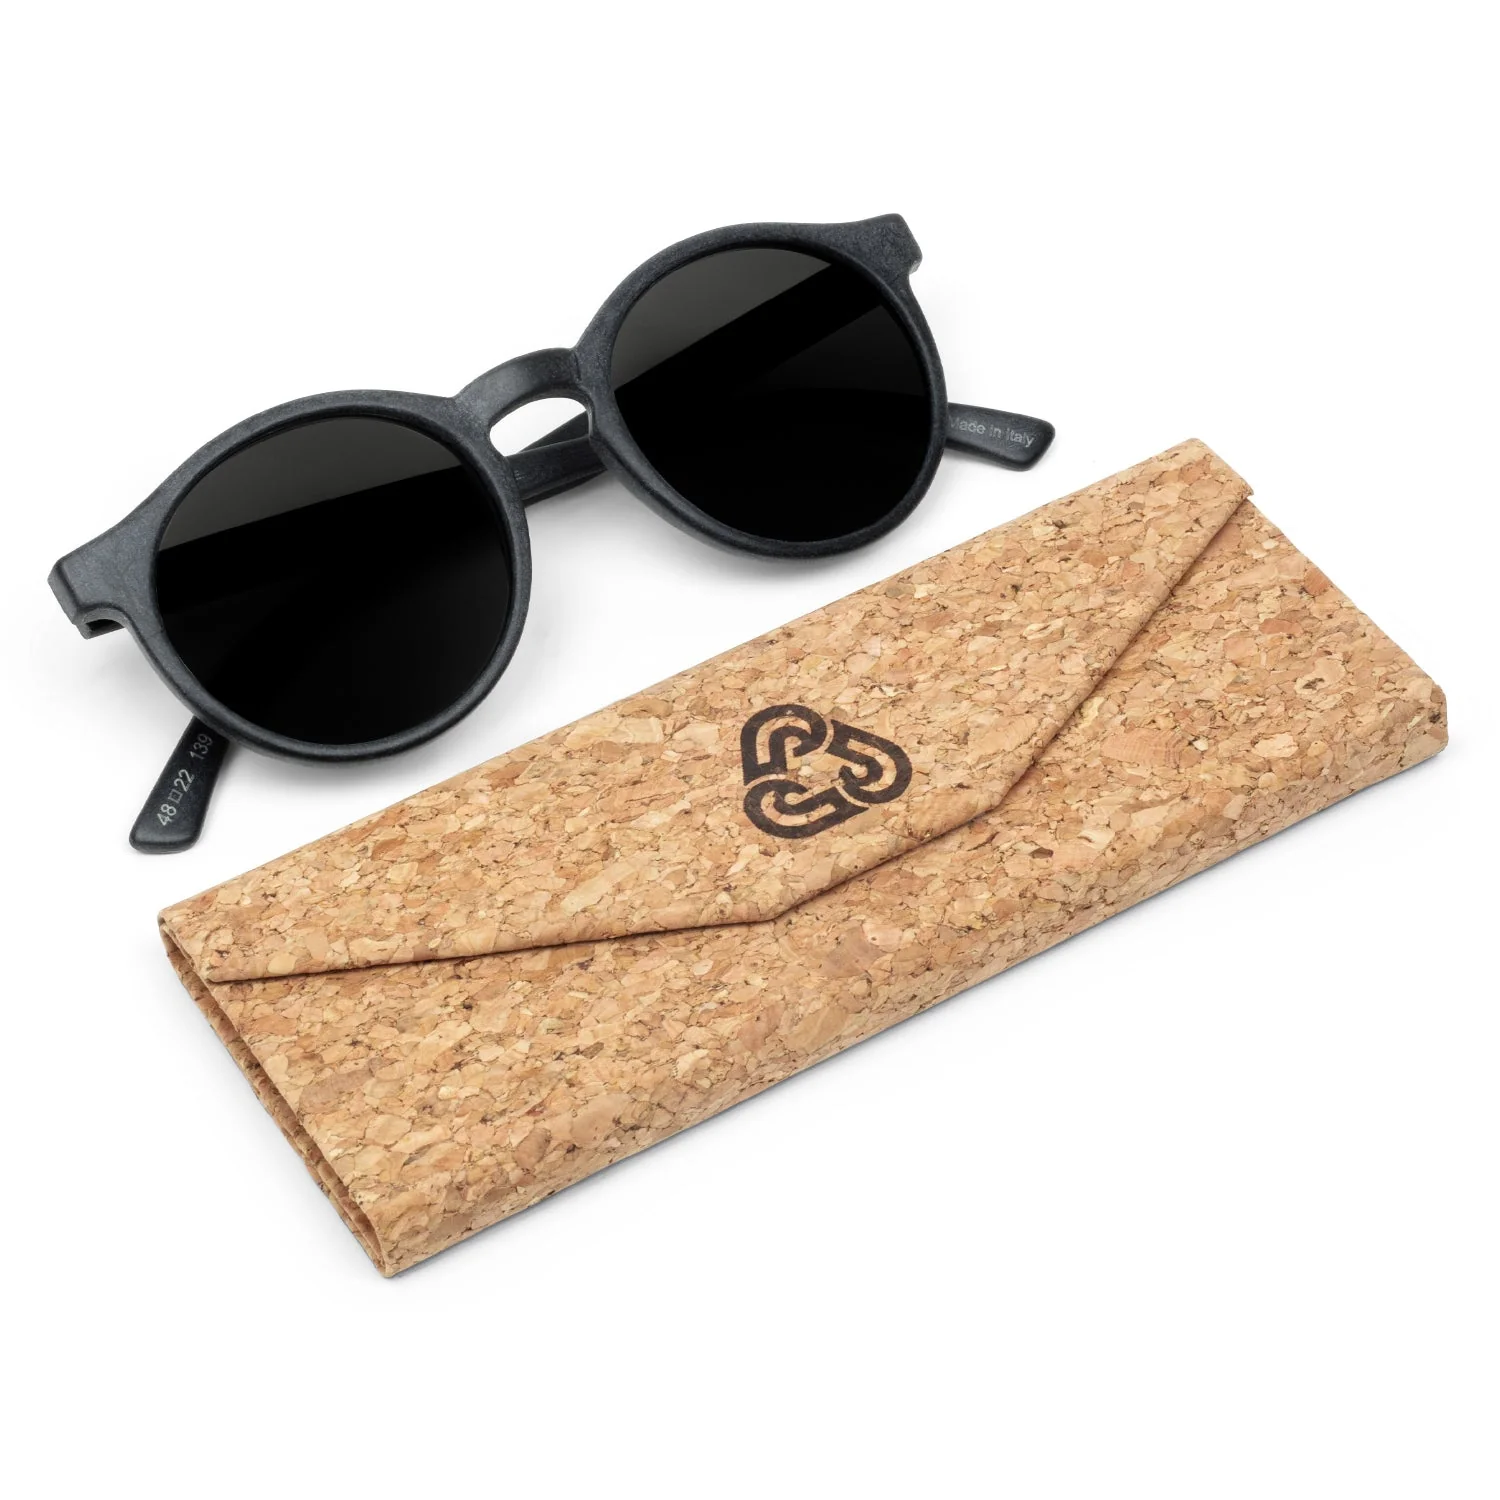 Waterhaul - Harlyn (Slate) Sustainable sunglasses